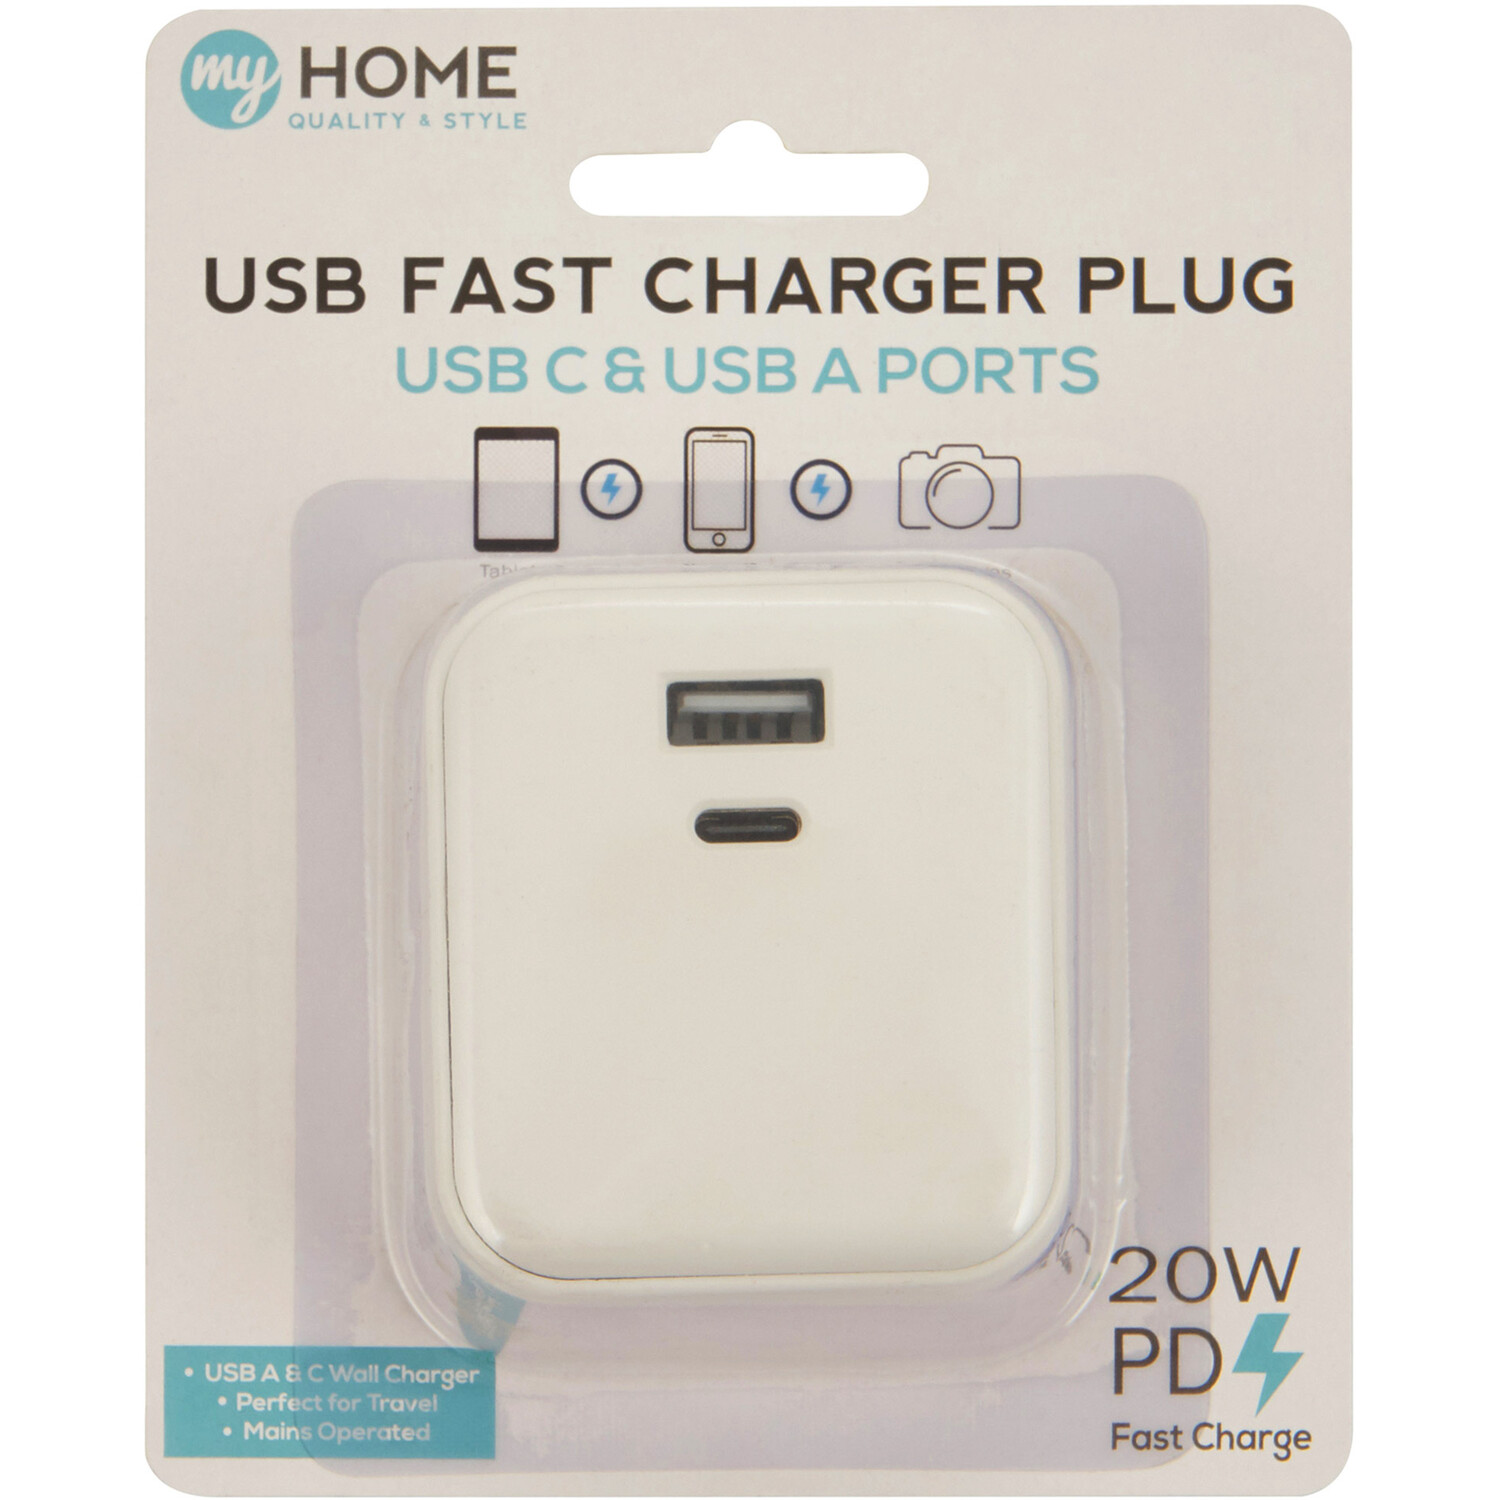 USB Fast Charger Plug - White Image 1